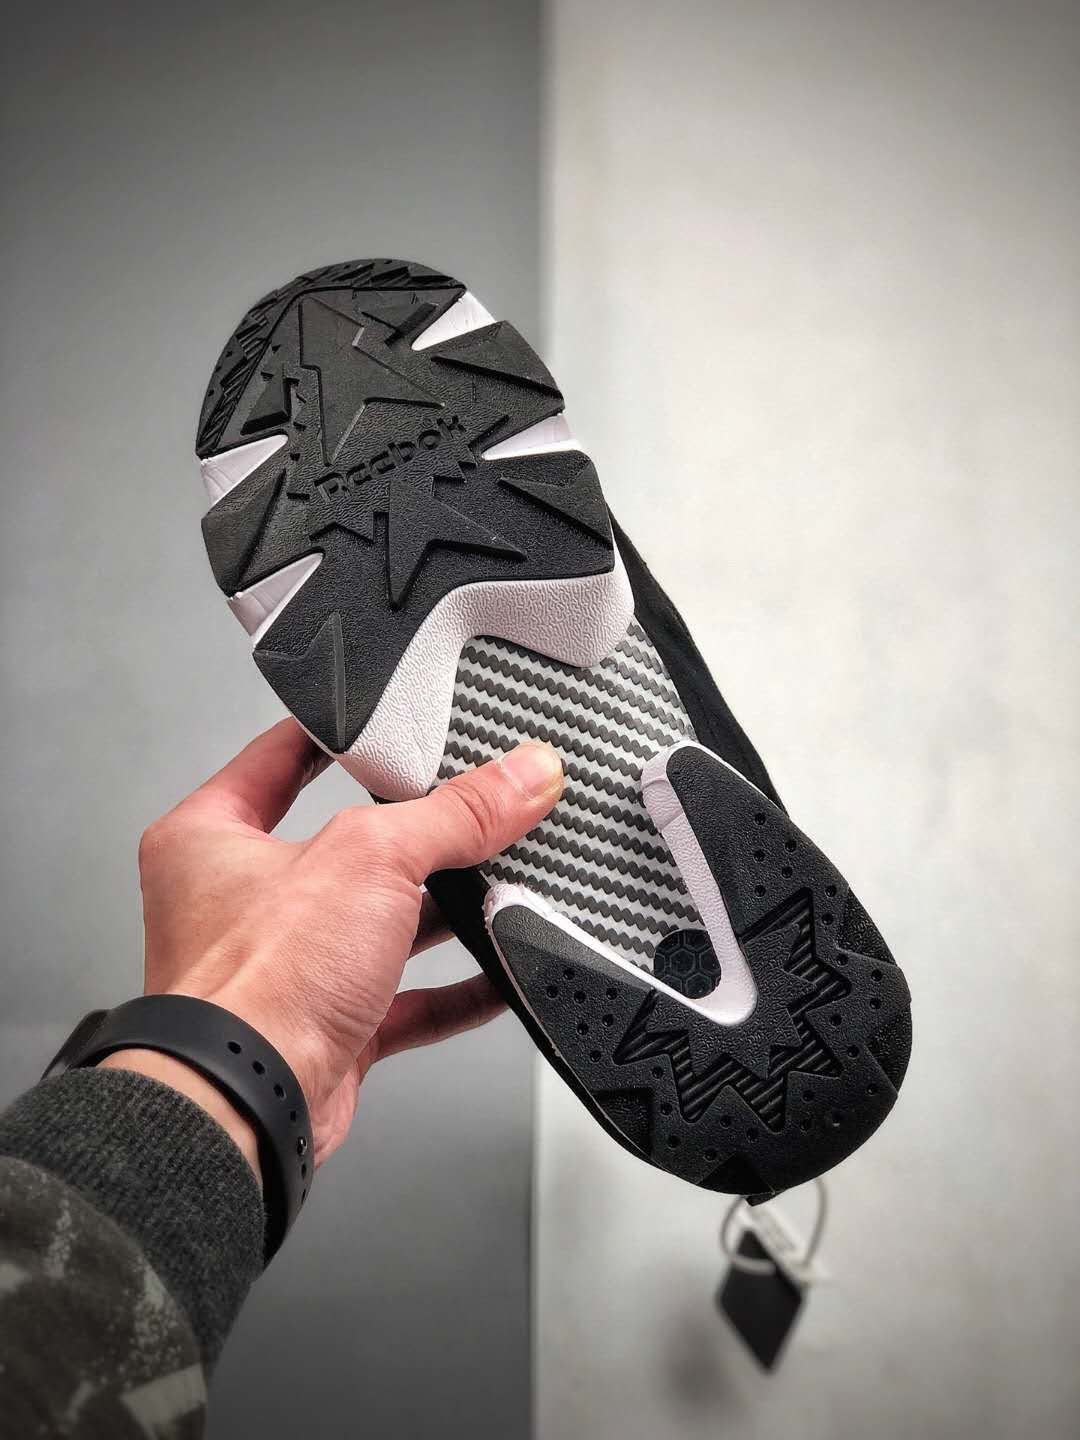 Reebok InstaPump Fury OG 'Black' V65750 - Stylish and Iconic Sneaker